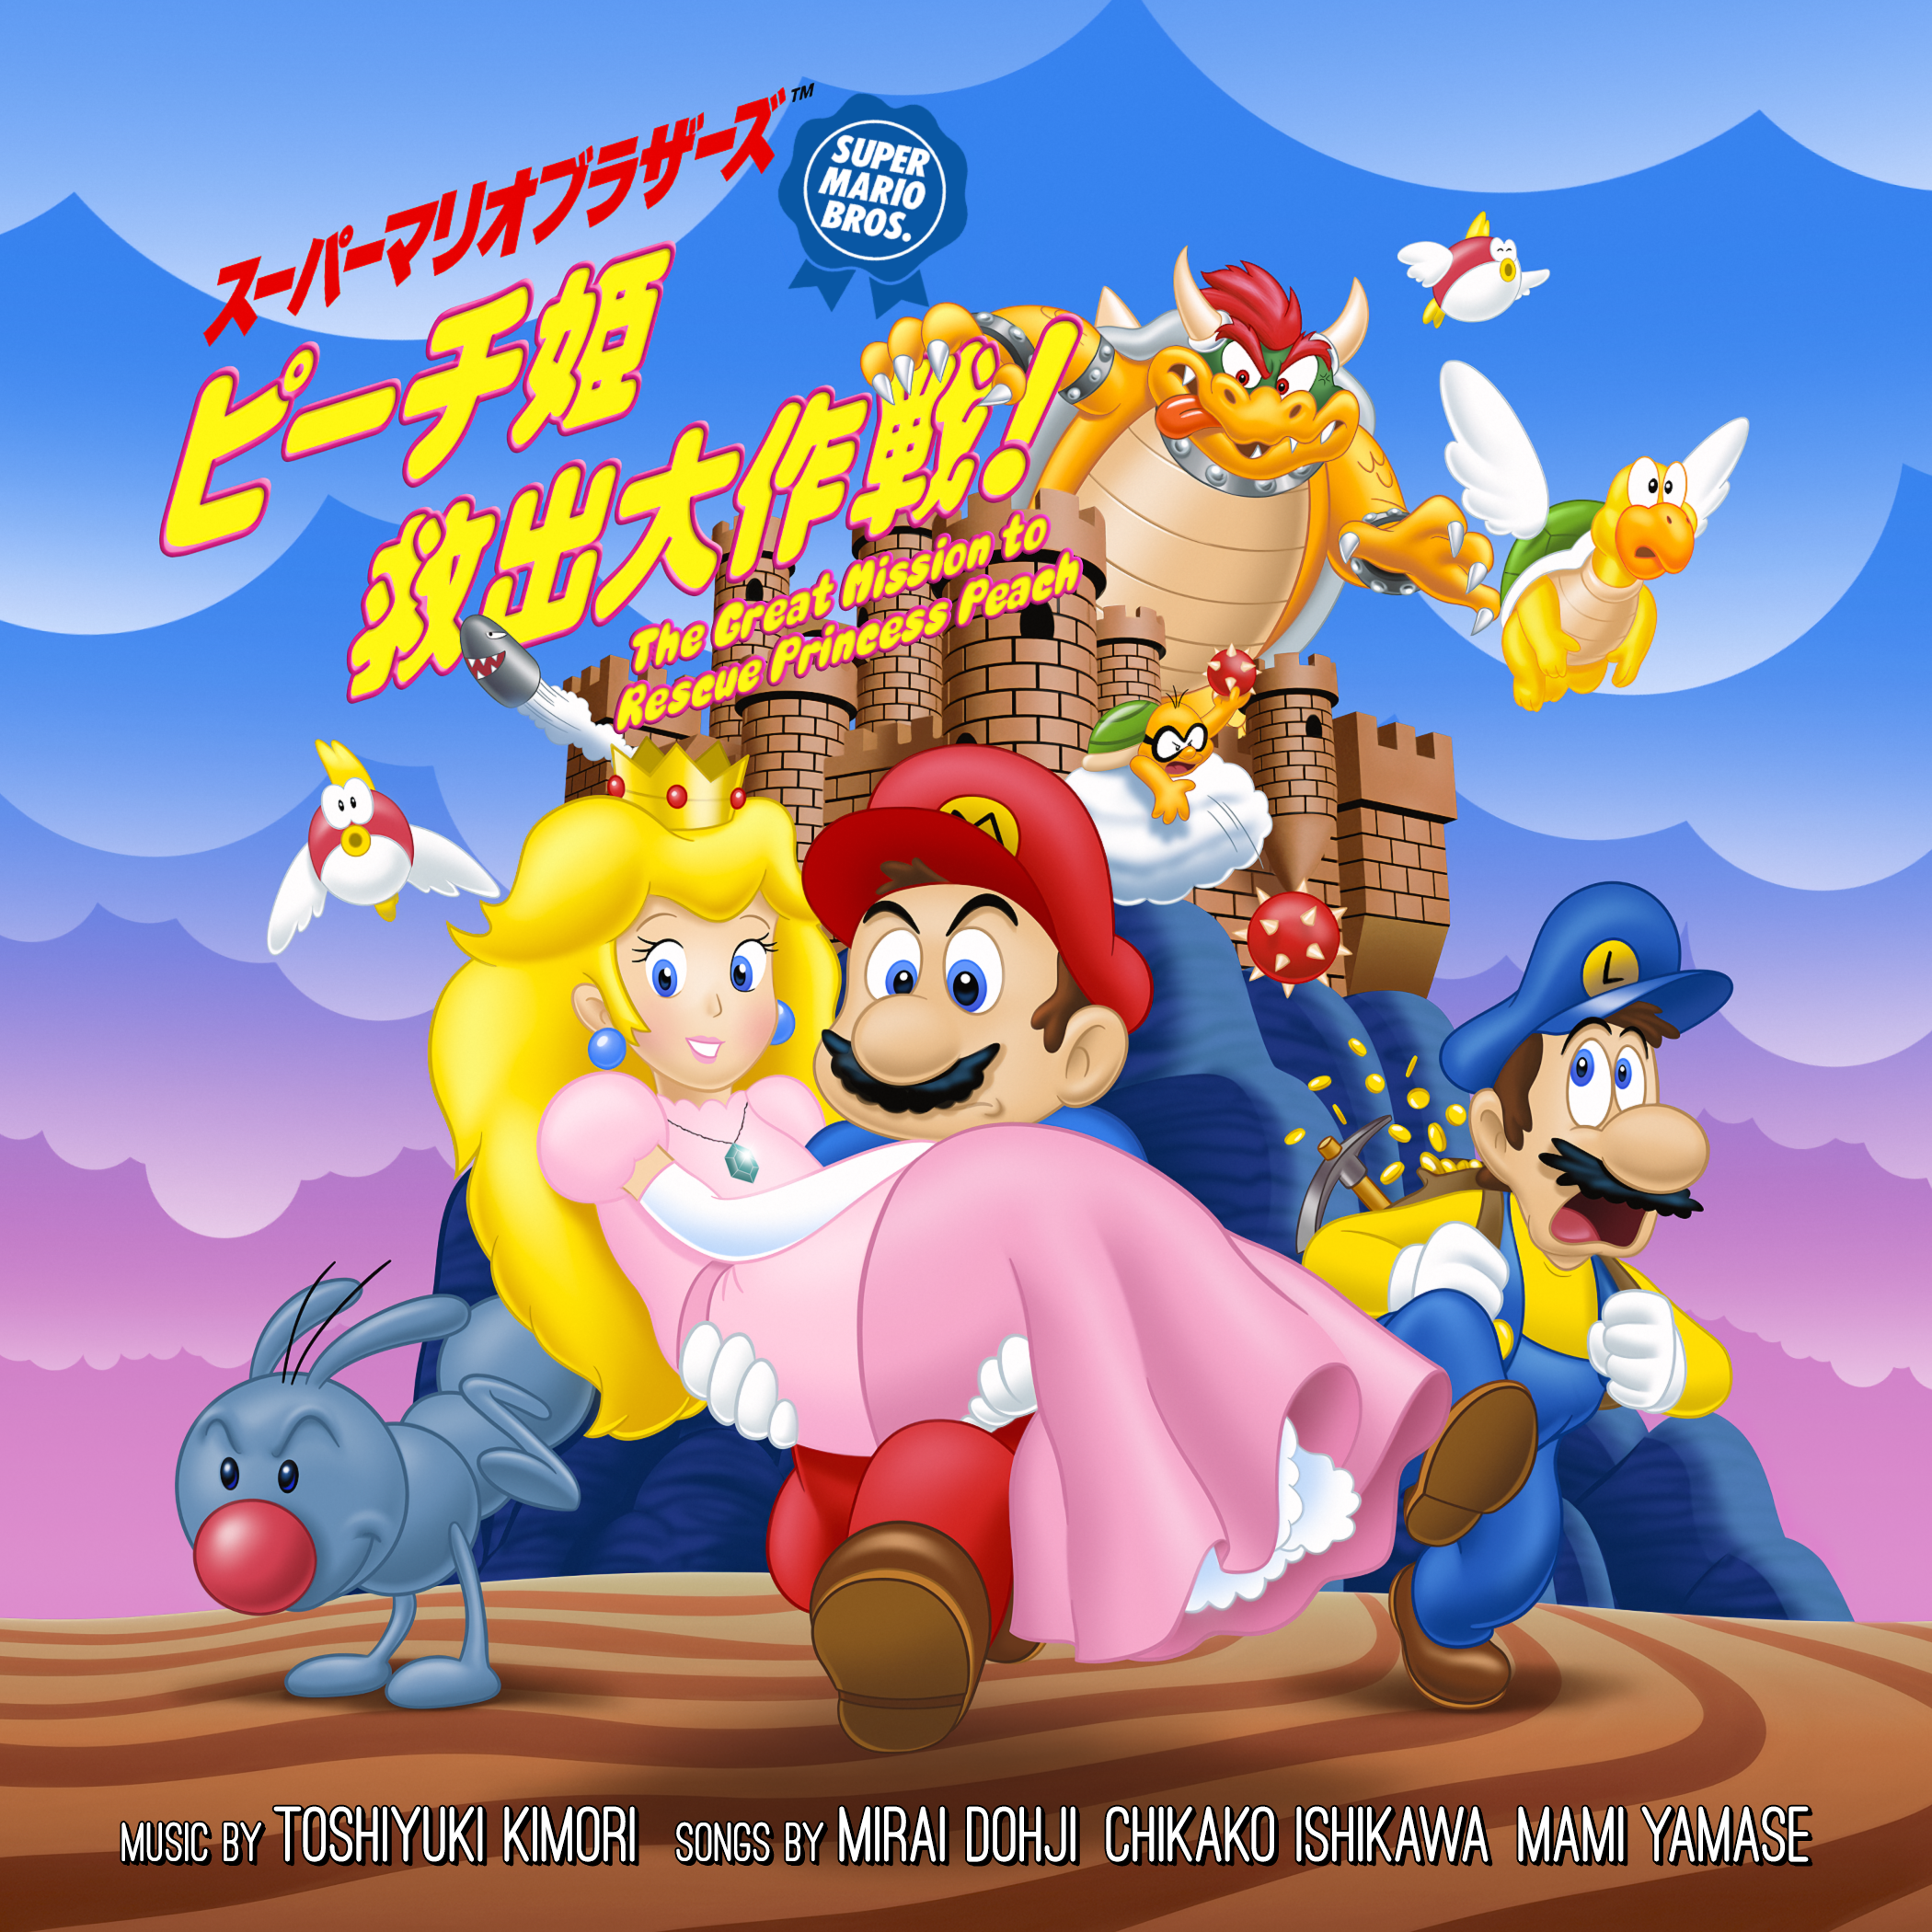 Peaches (From the Super Mario Bros. Movie) - Single - Album by